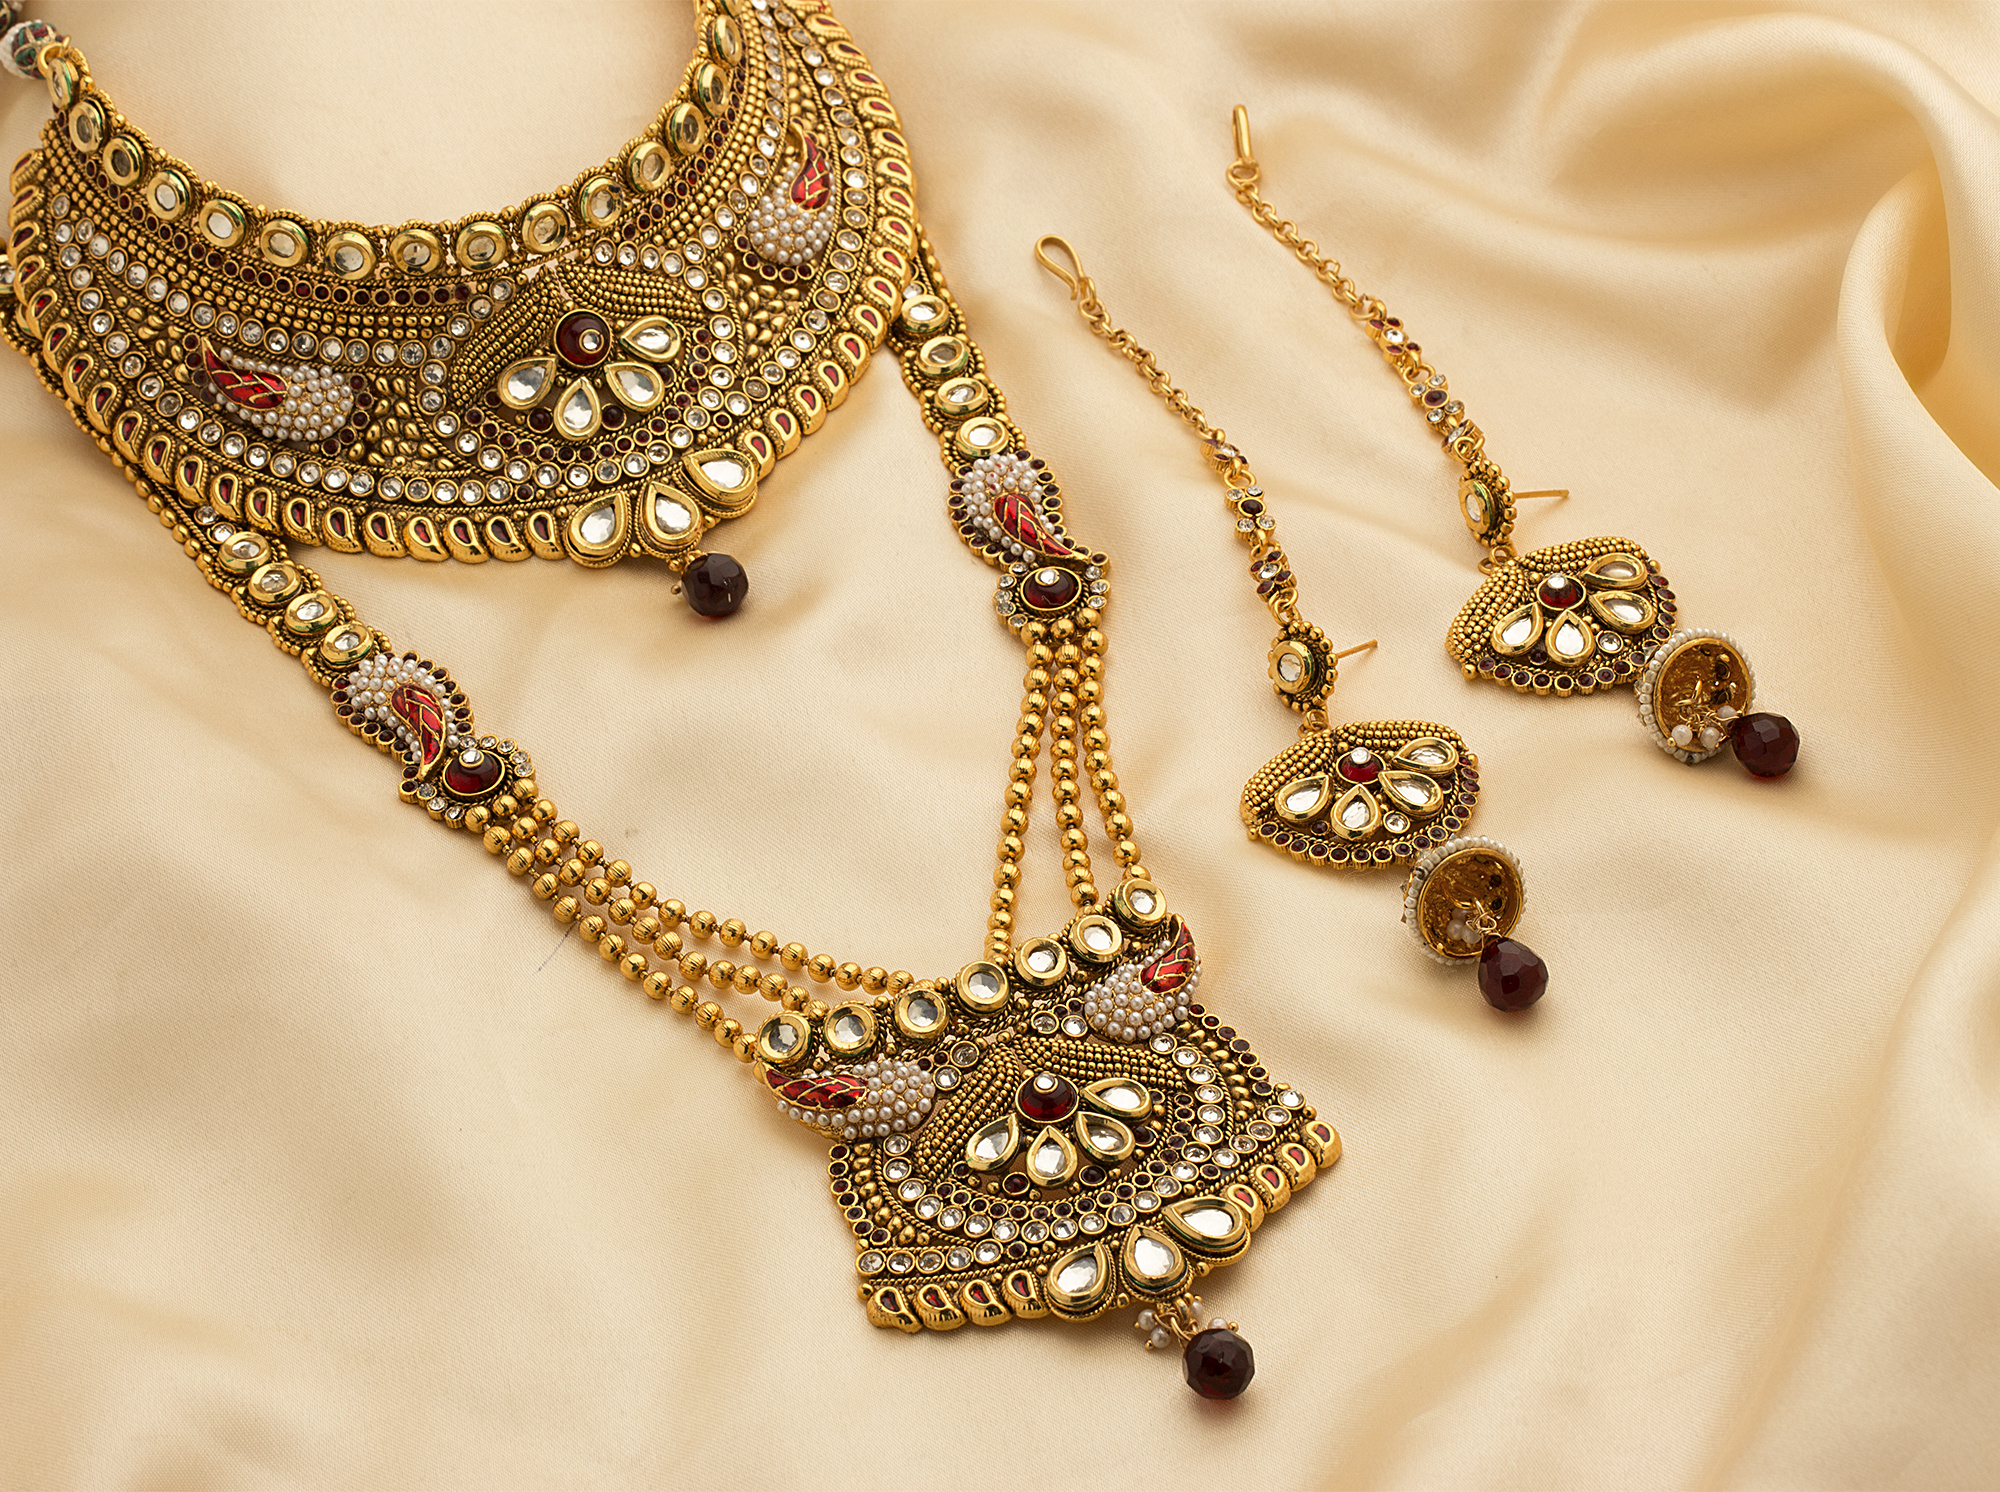 Gold jewelry wallpaper, Stylish designs, Elegant necklaces, Fashionable accessories, 2000x1500 HD Desktop